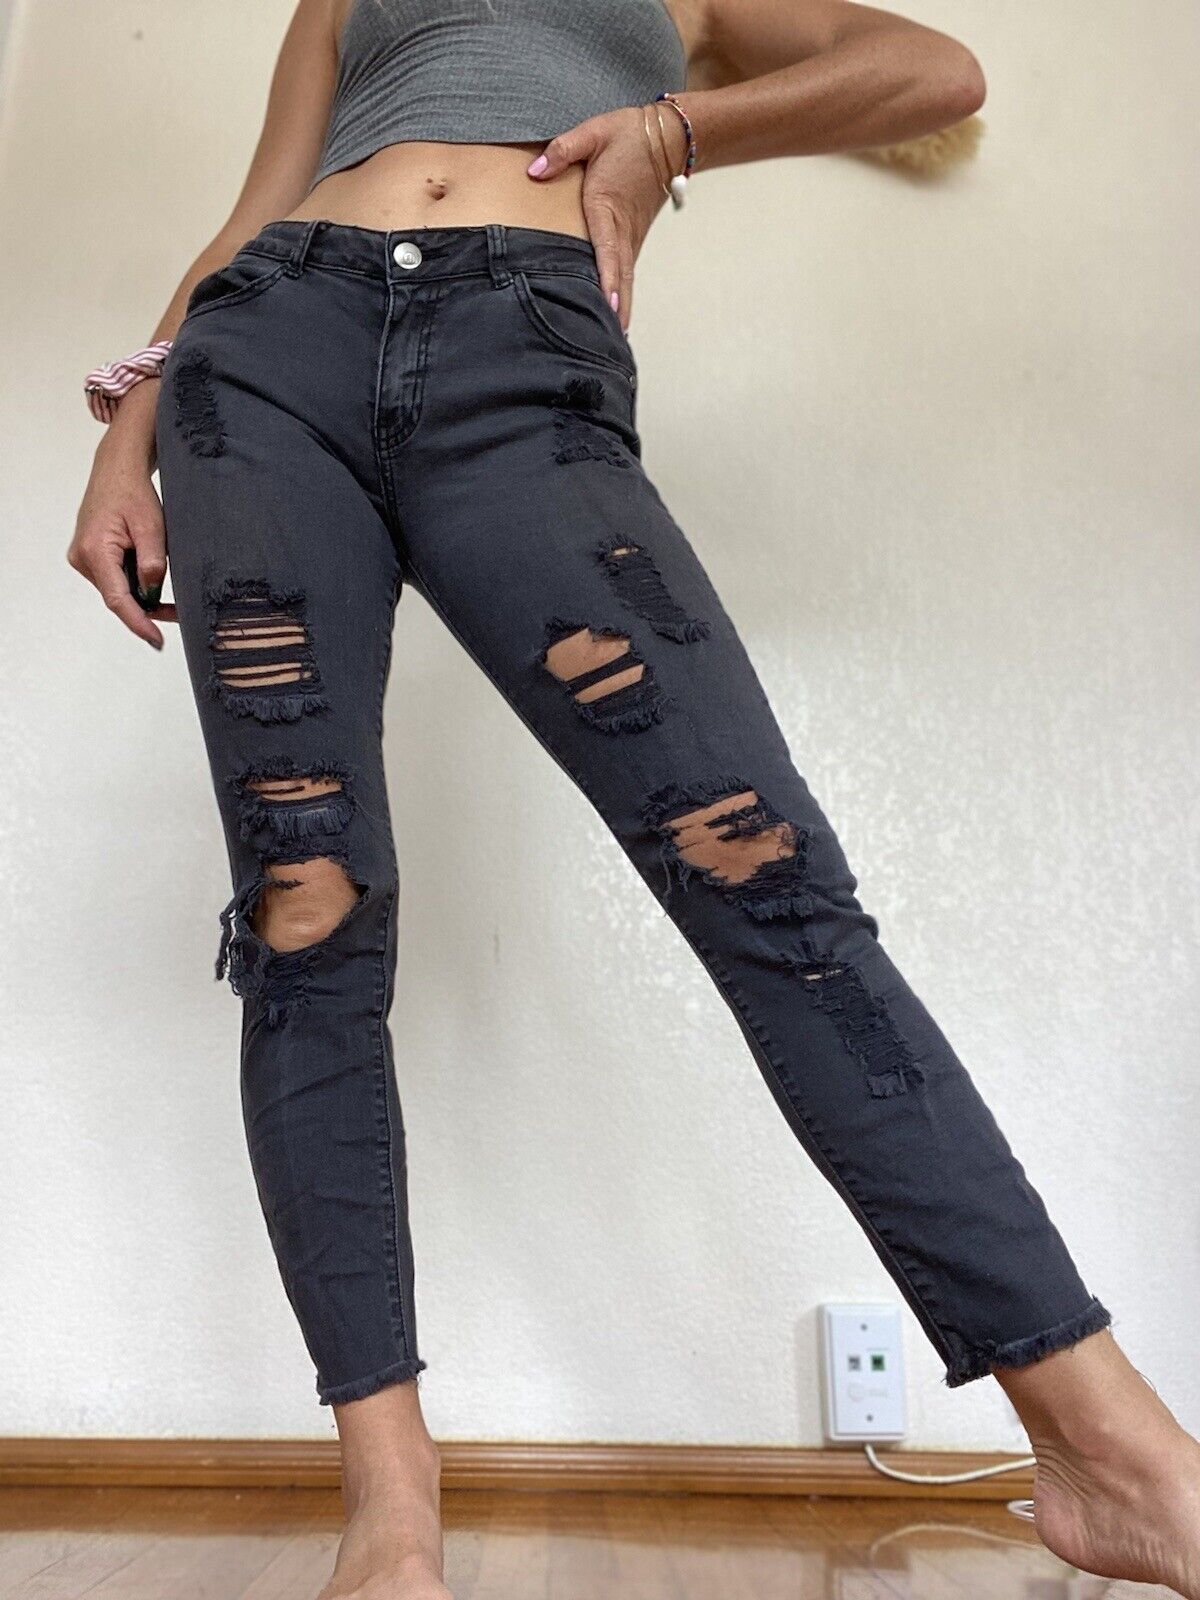 Black Distressed Skinny Jeans - 91 - Size 6